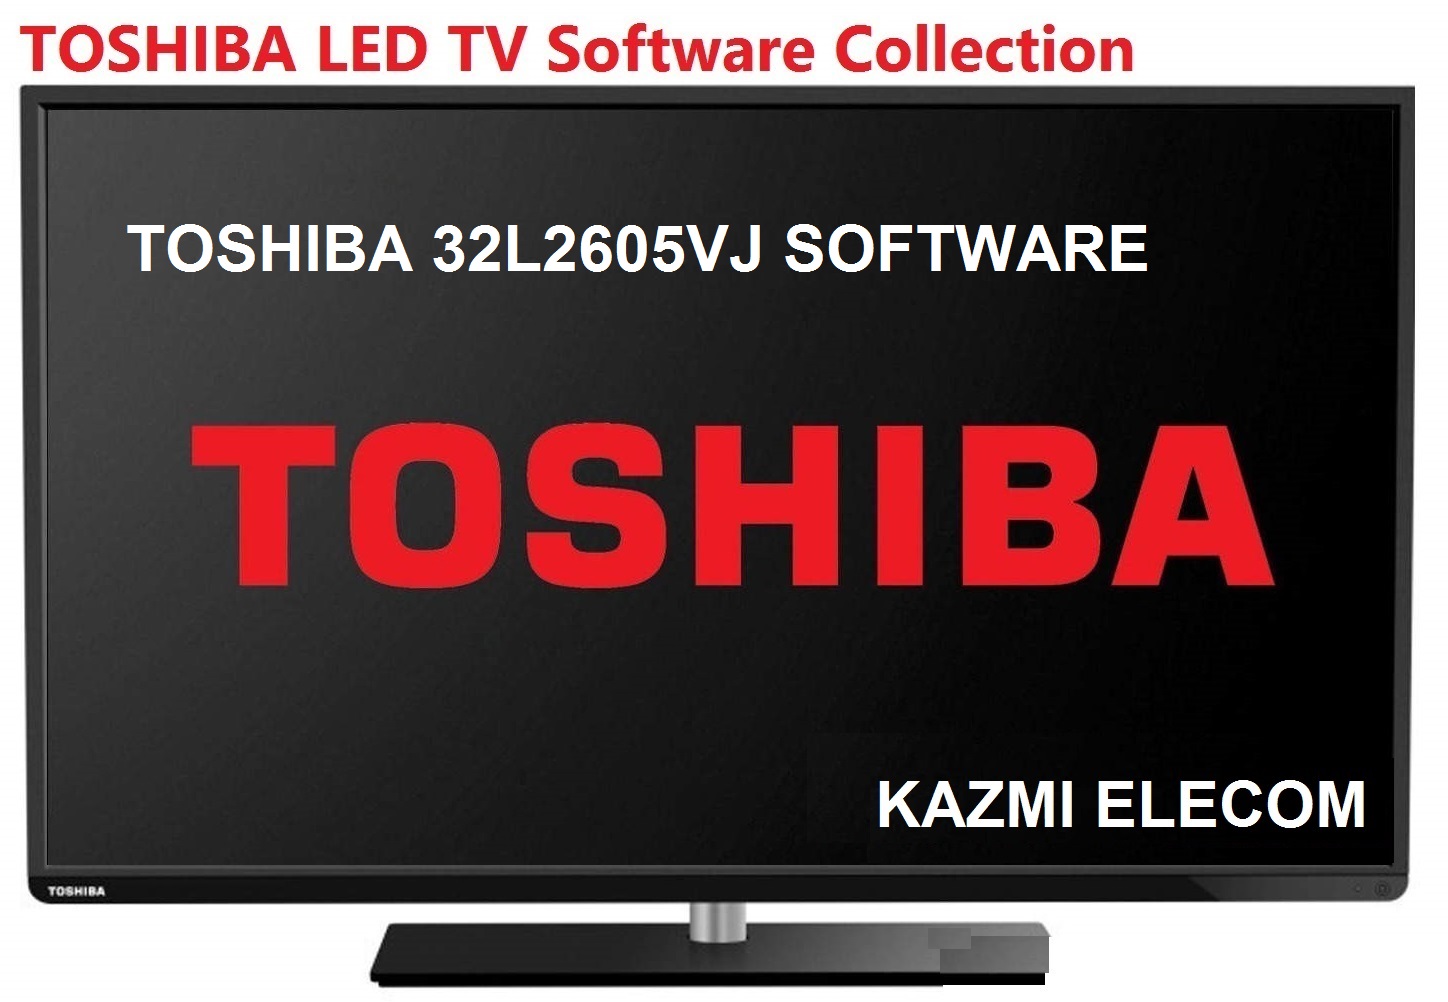 Toshiba 32L2605Vj